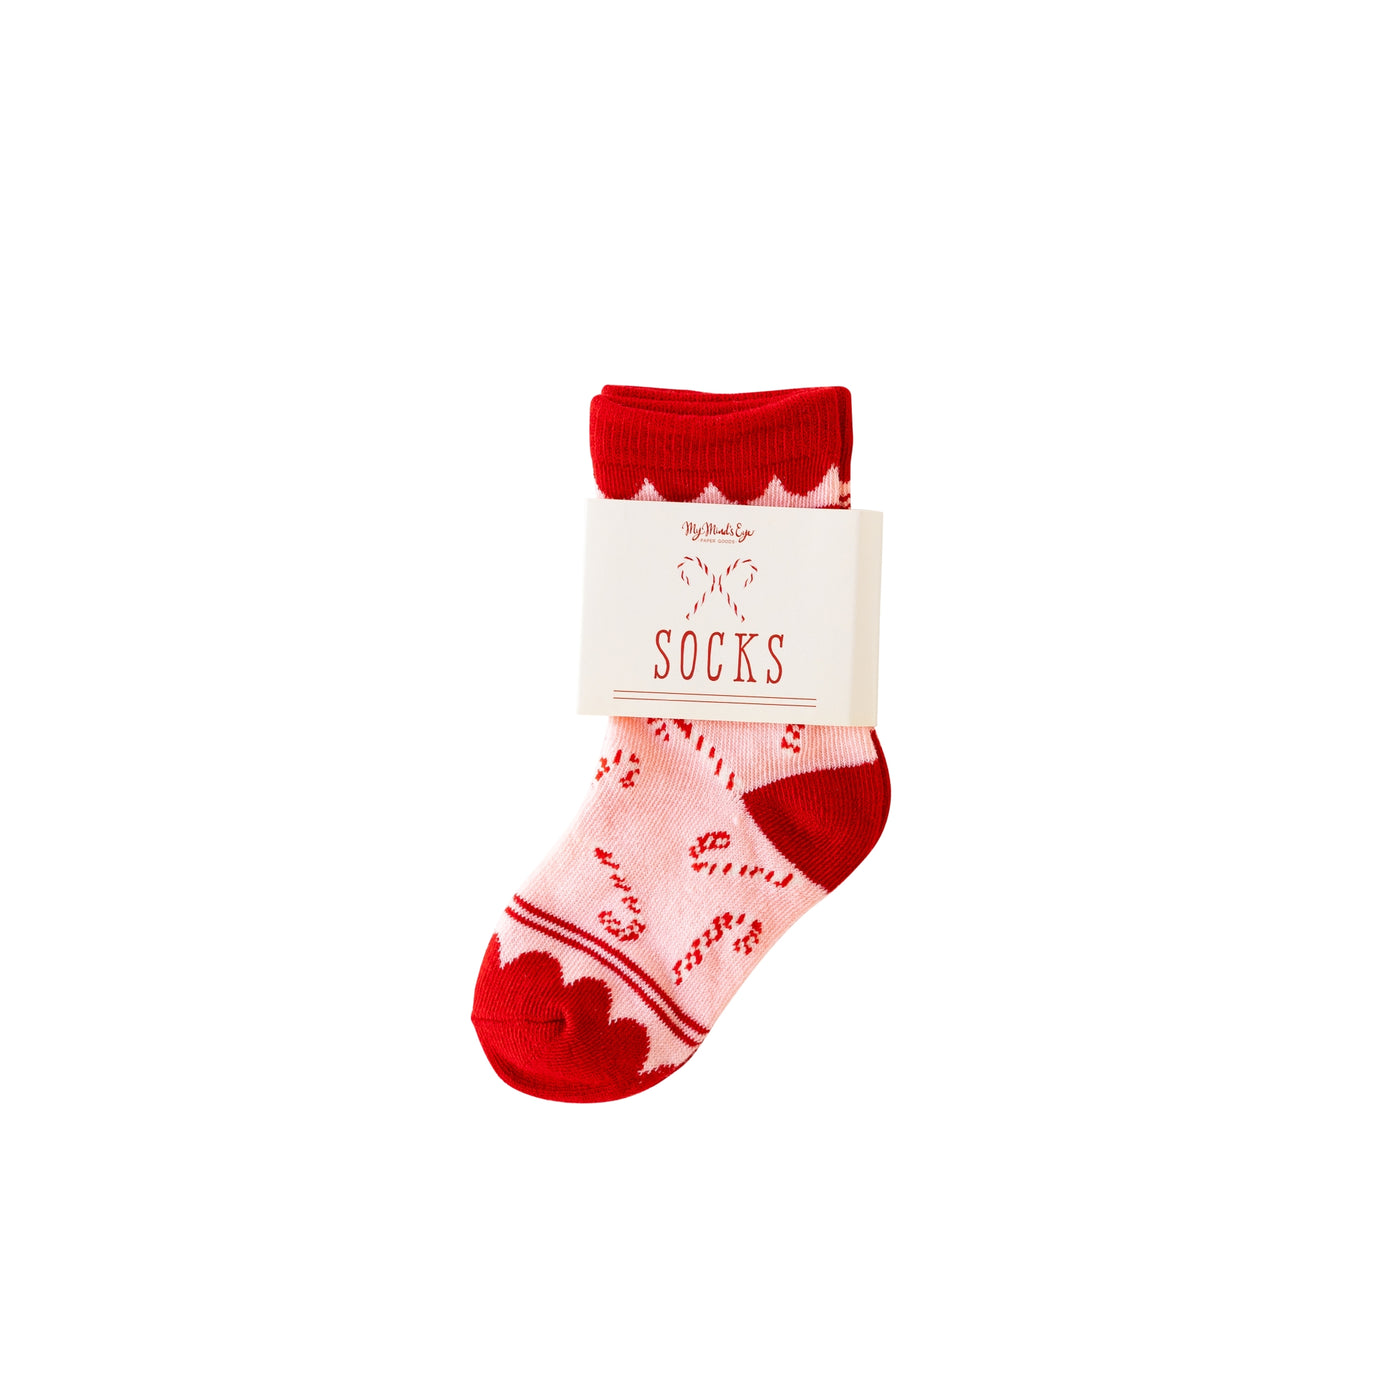 Whimsy Santa Candy Cane Socks